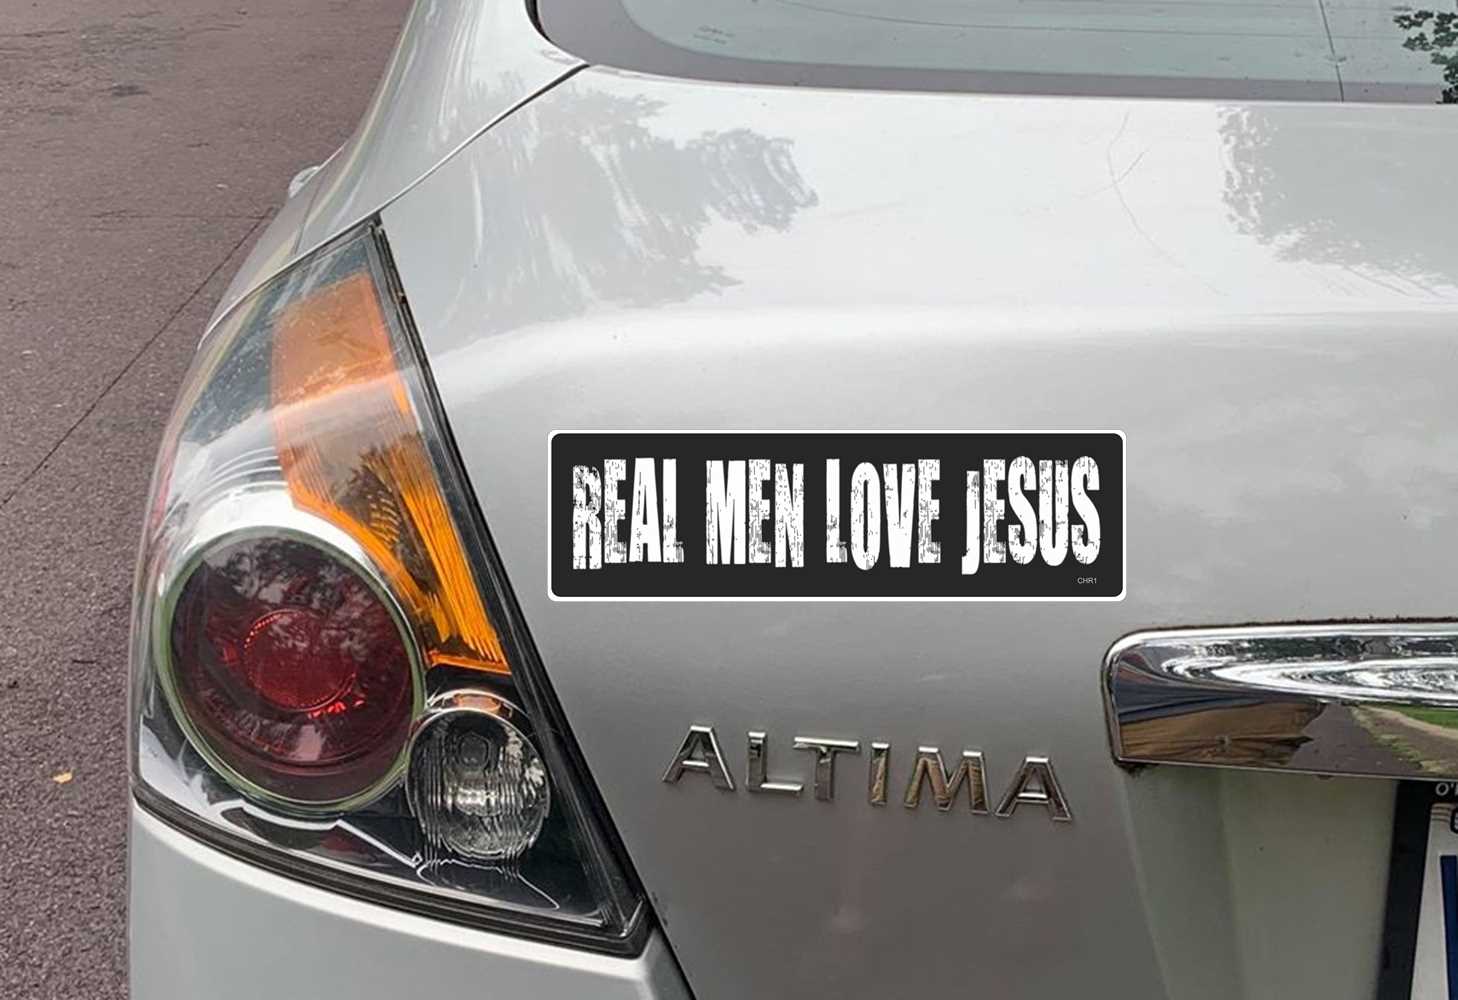 REAL MEN LOVE JESUS BUMPER STICKER ON CAR